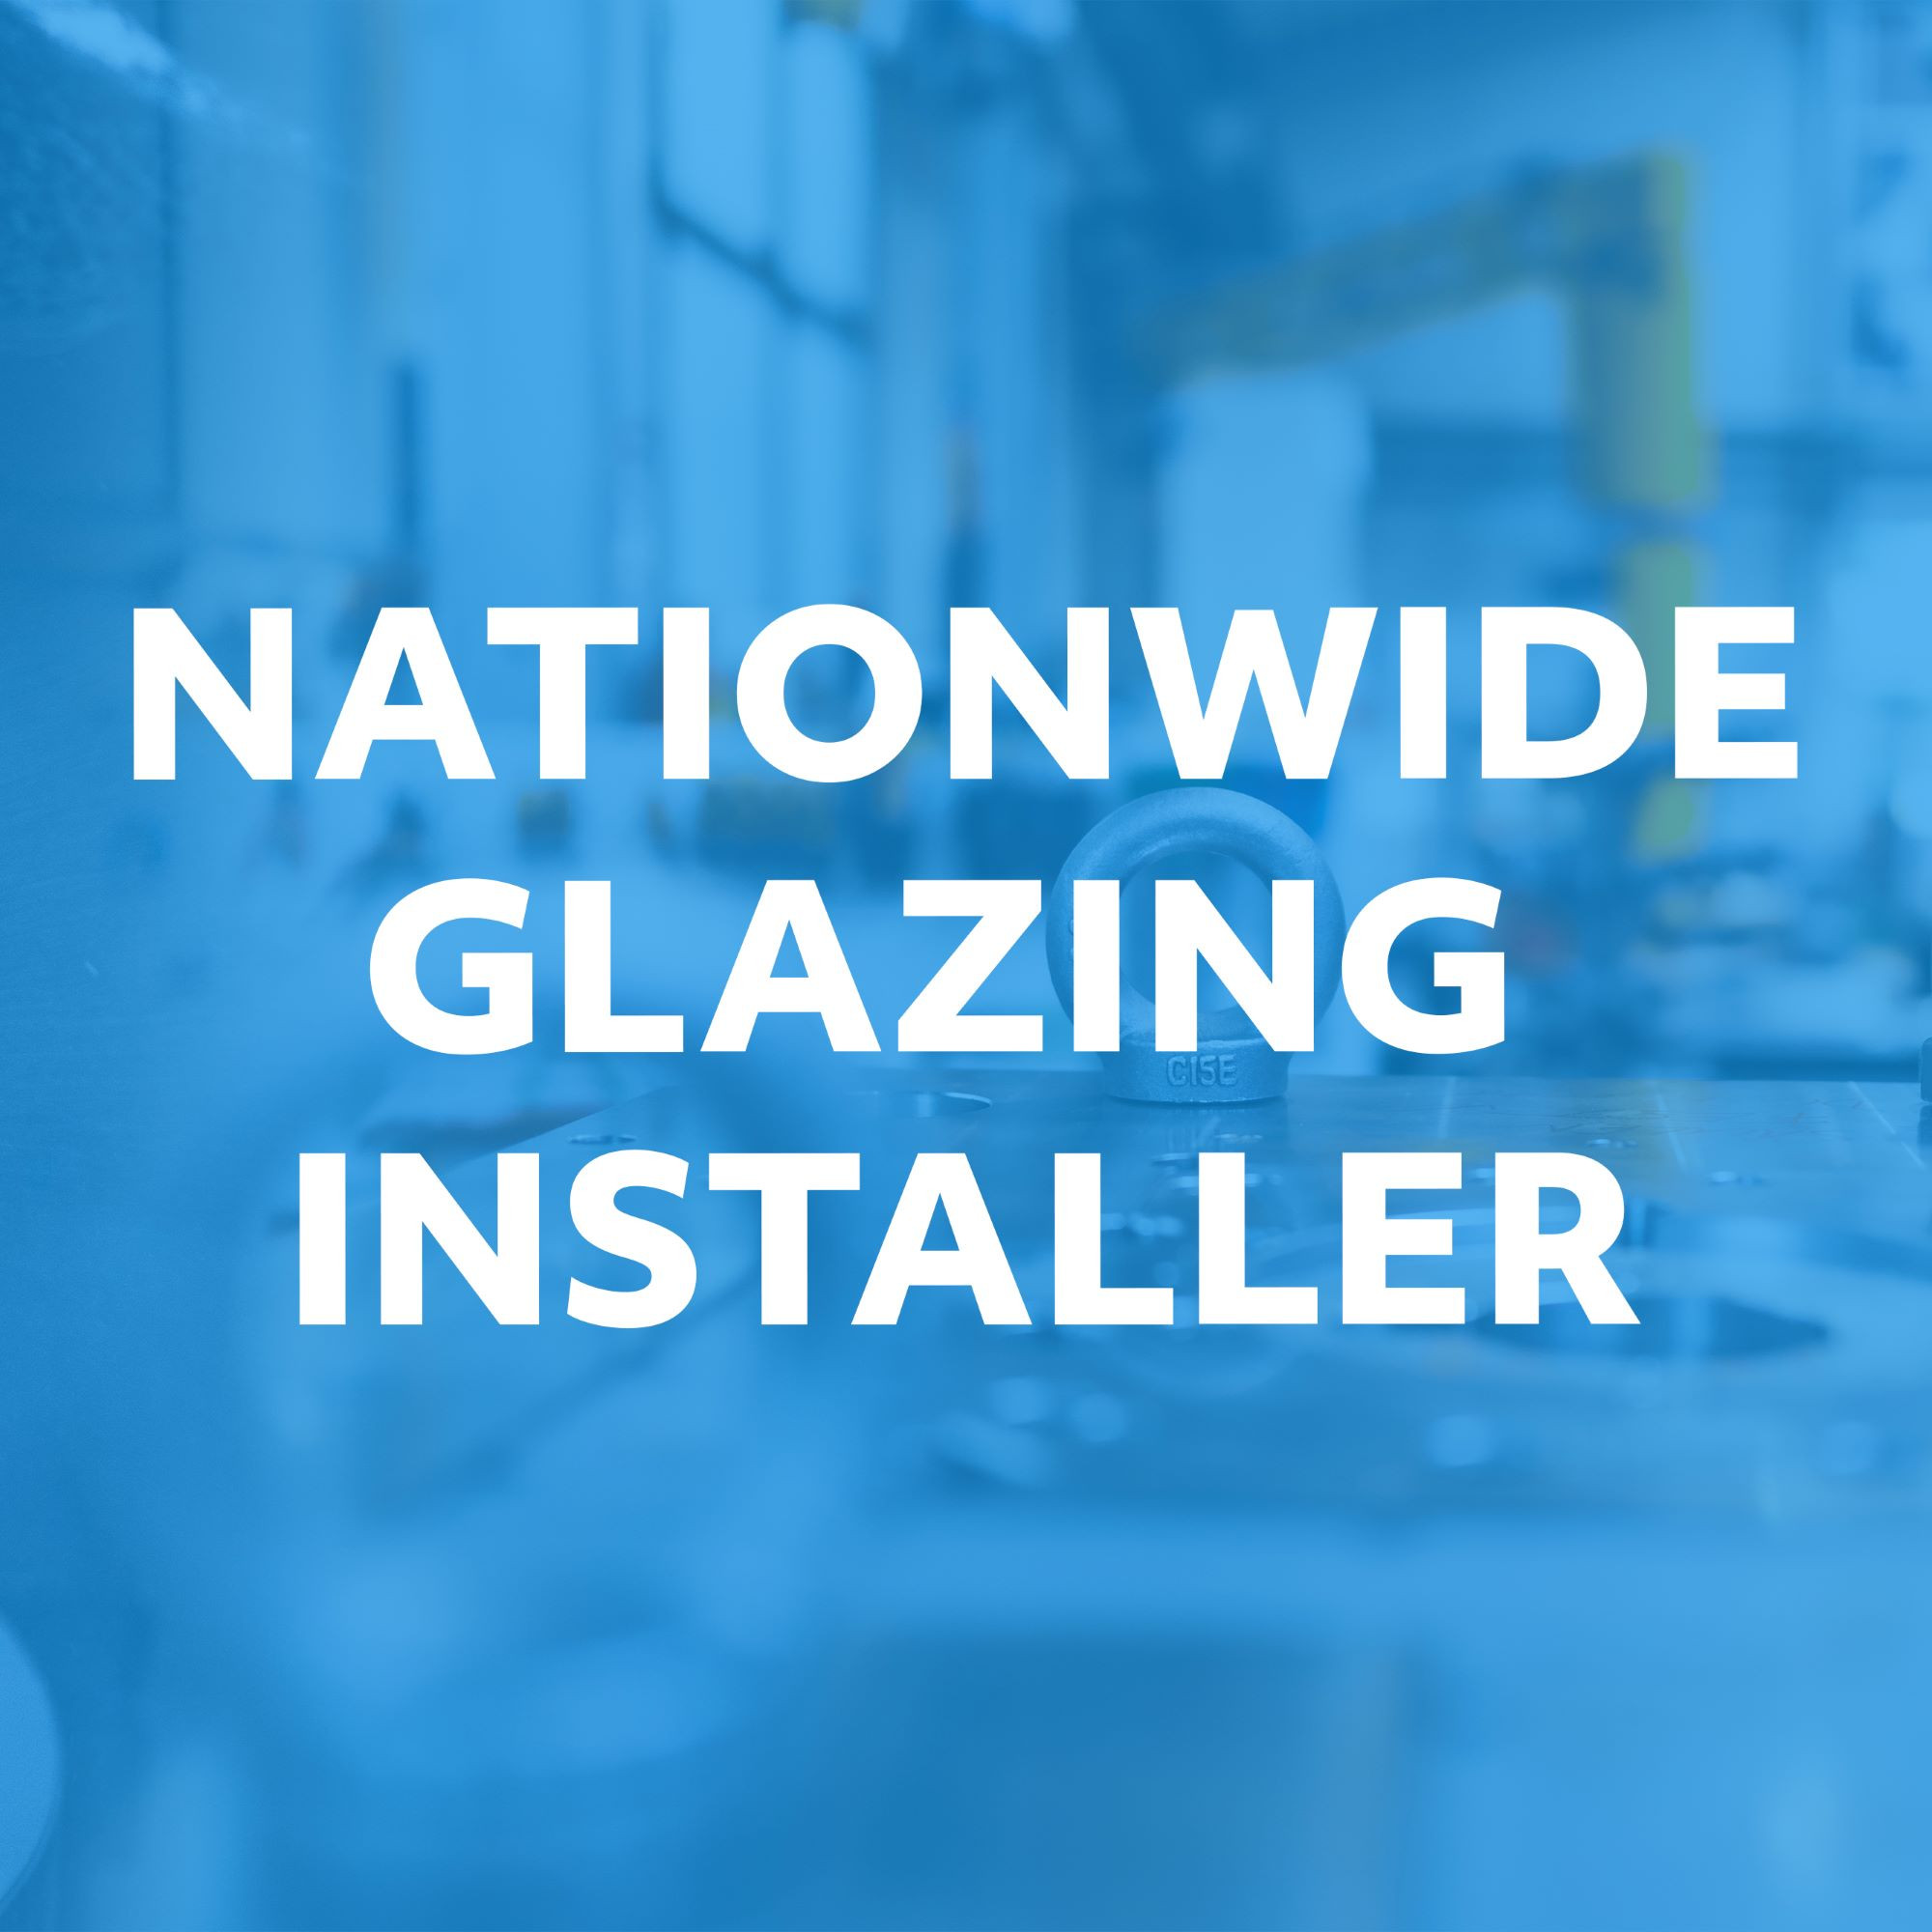 Manufacturing #002 - Nationwide Glazing Installer